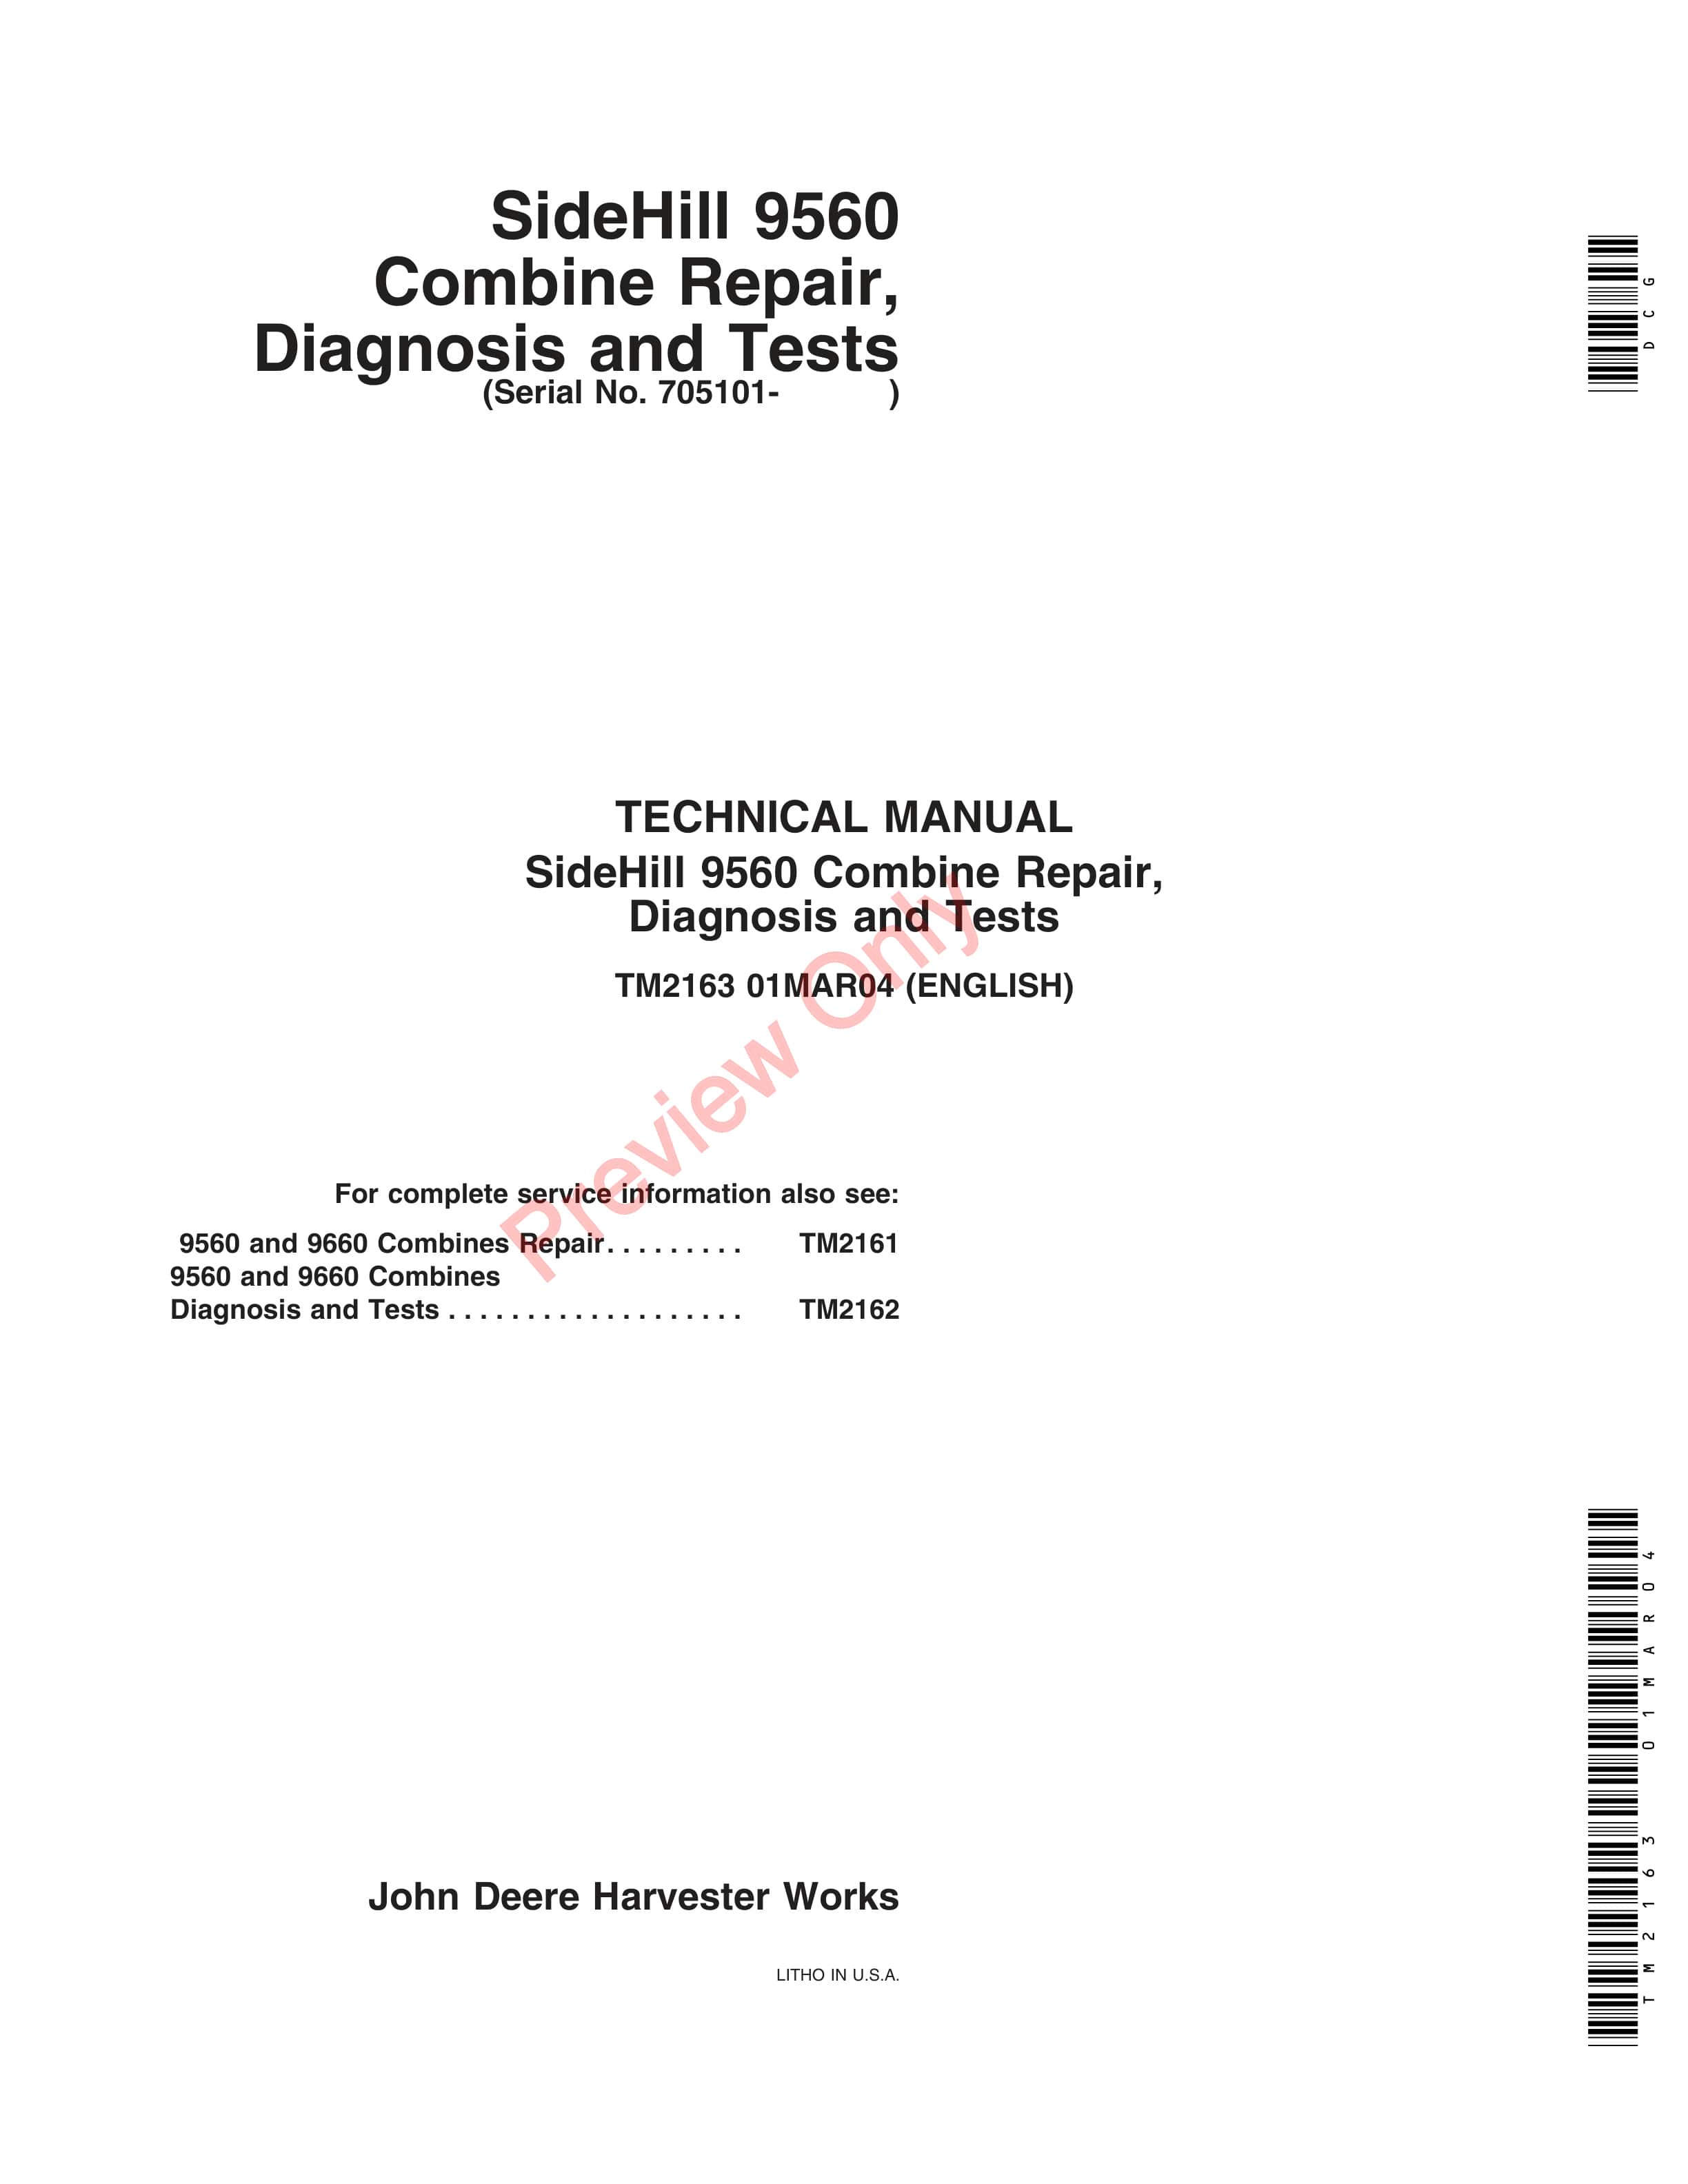 John Deere 9650SH Combine 705101 Technical Manual TM2163 01MAR04 1